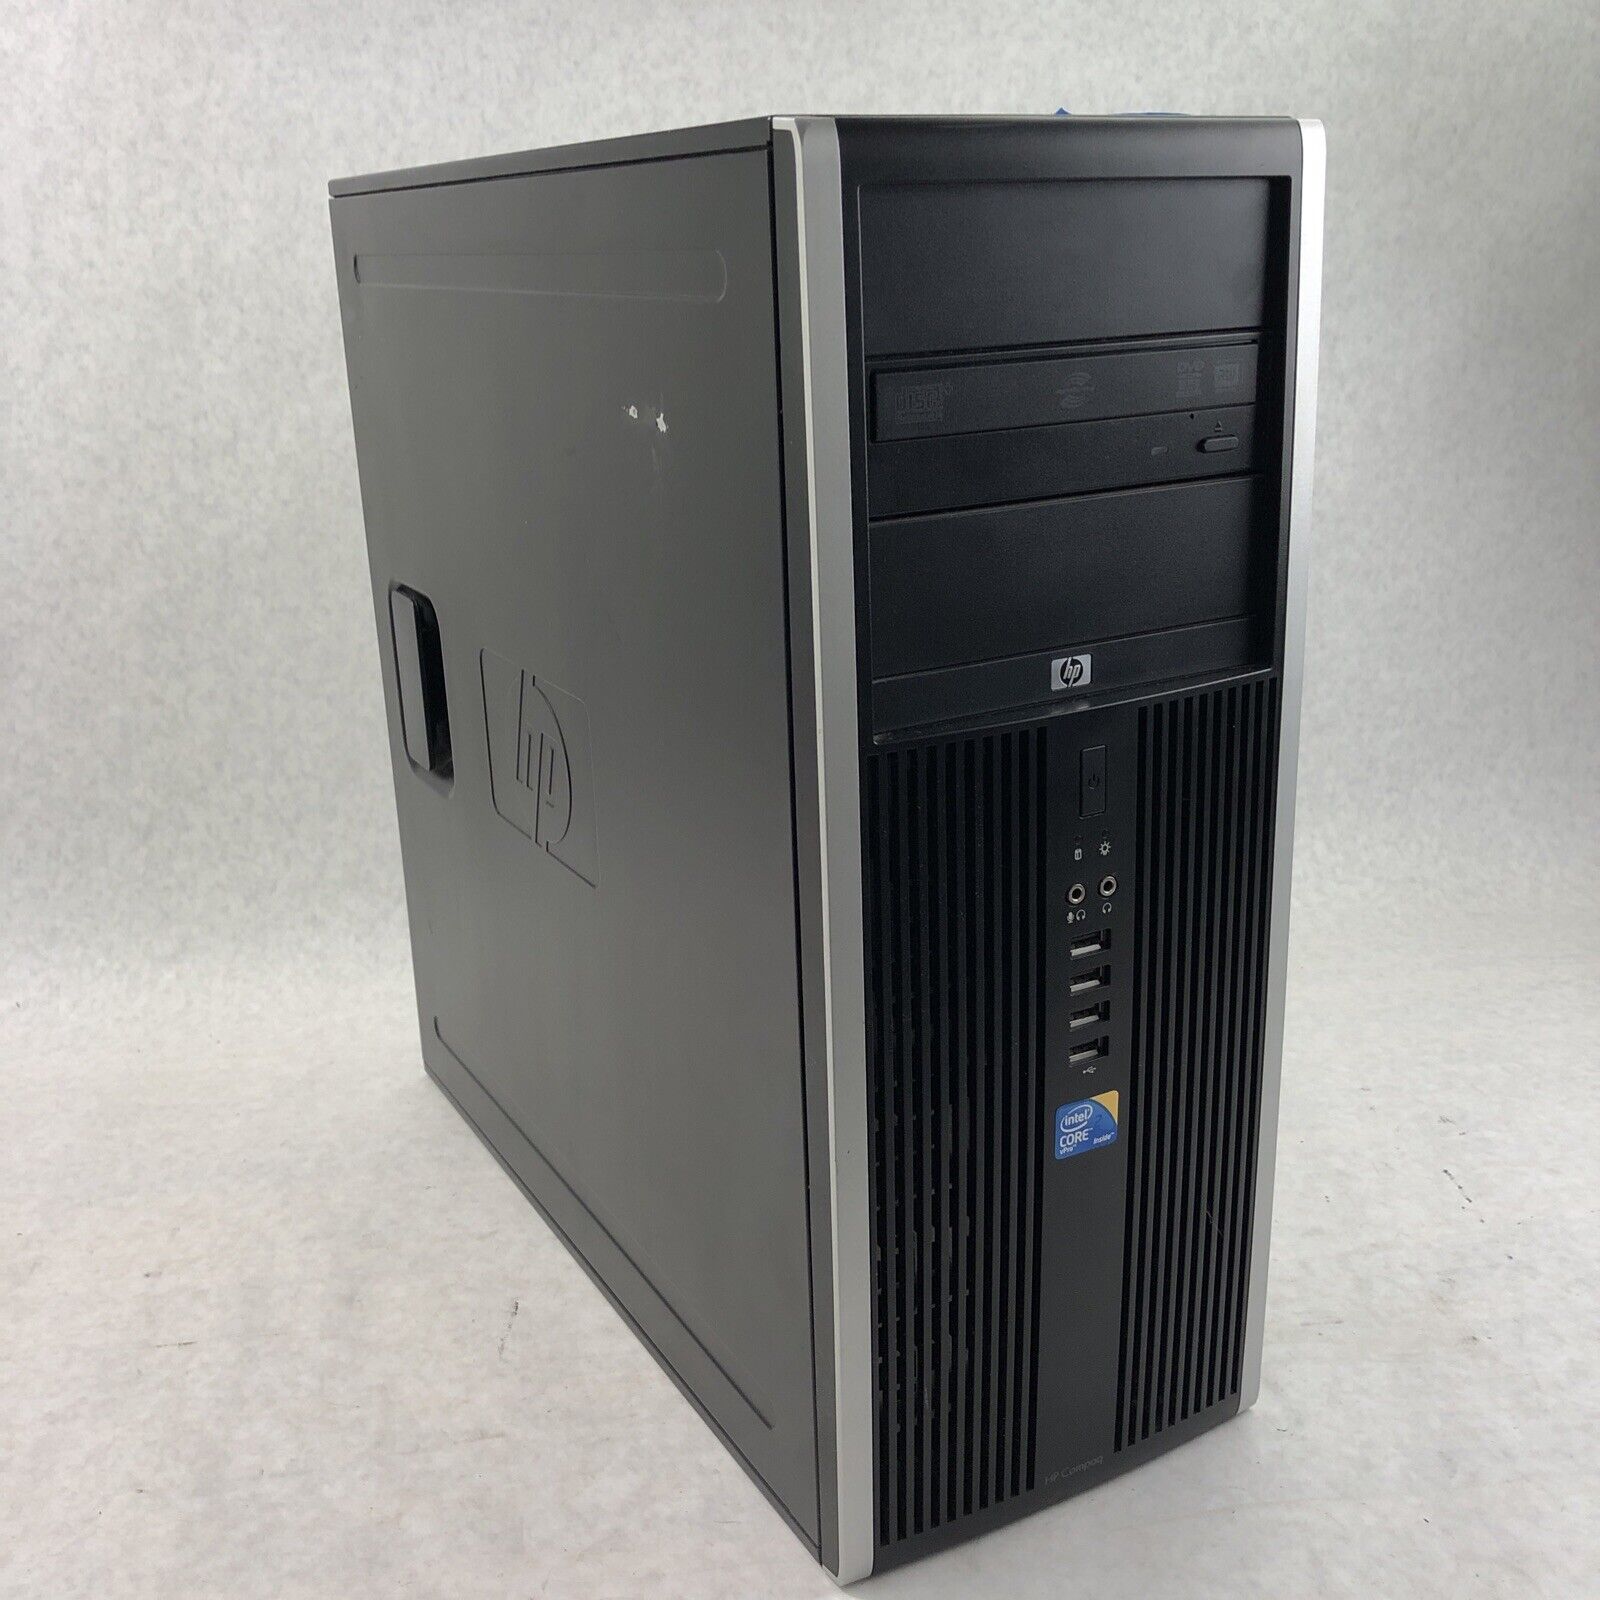 HP Compaq 8000 Elite Desktop Intel Core Duo 3.00GHz 2GB RAM No HDD N